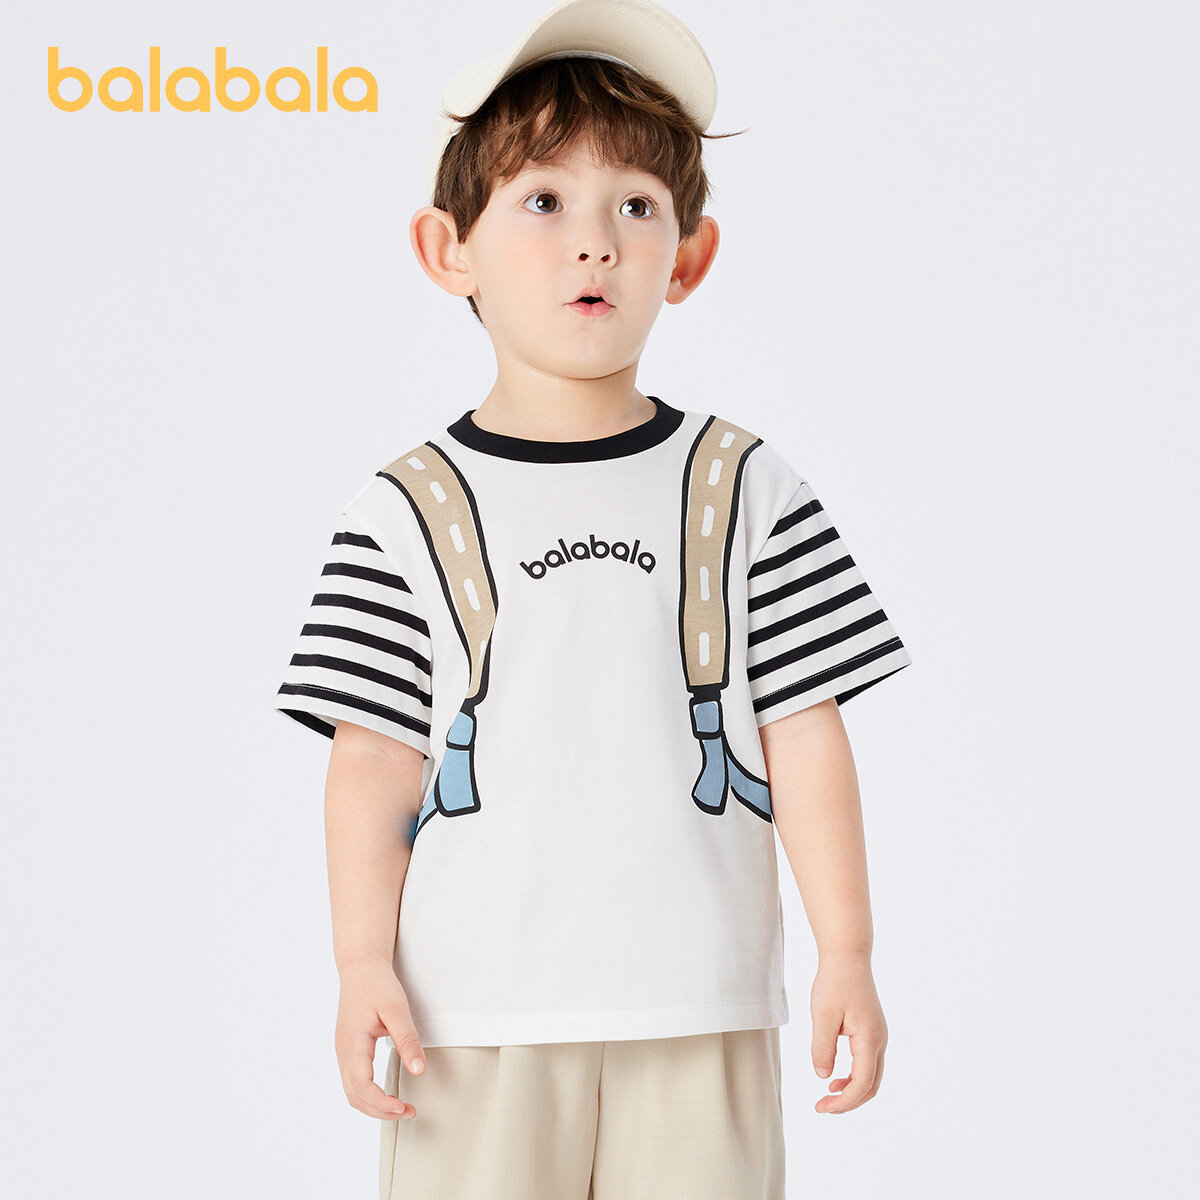 balabala 男幼童背包男幼童T恤 2-8 歲